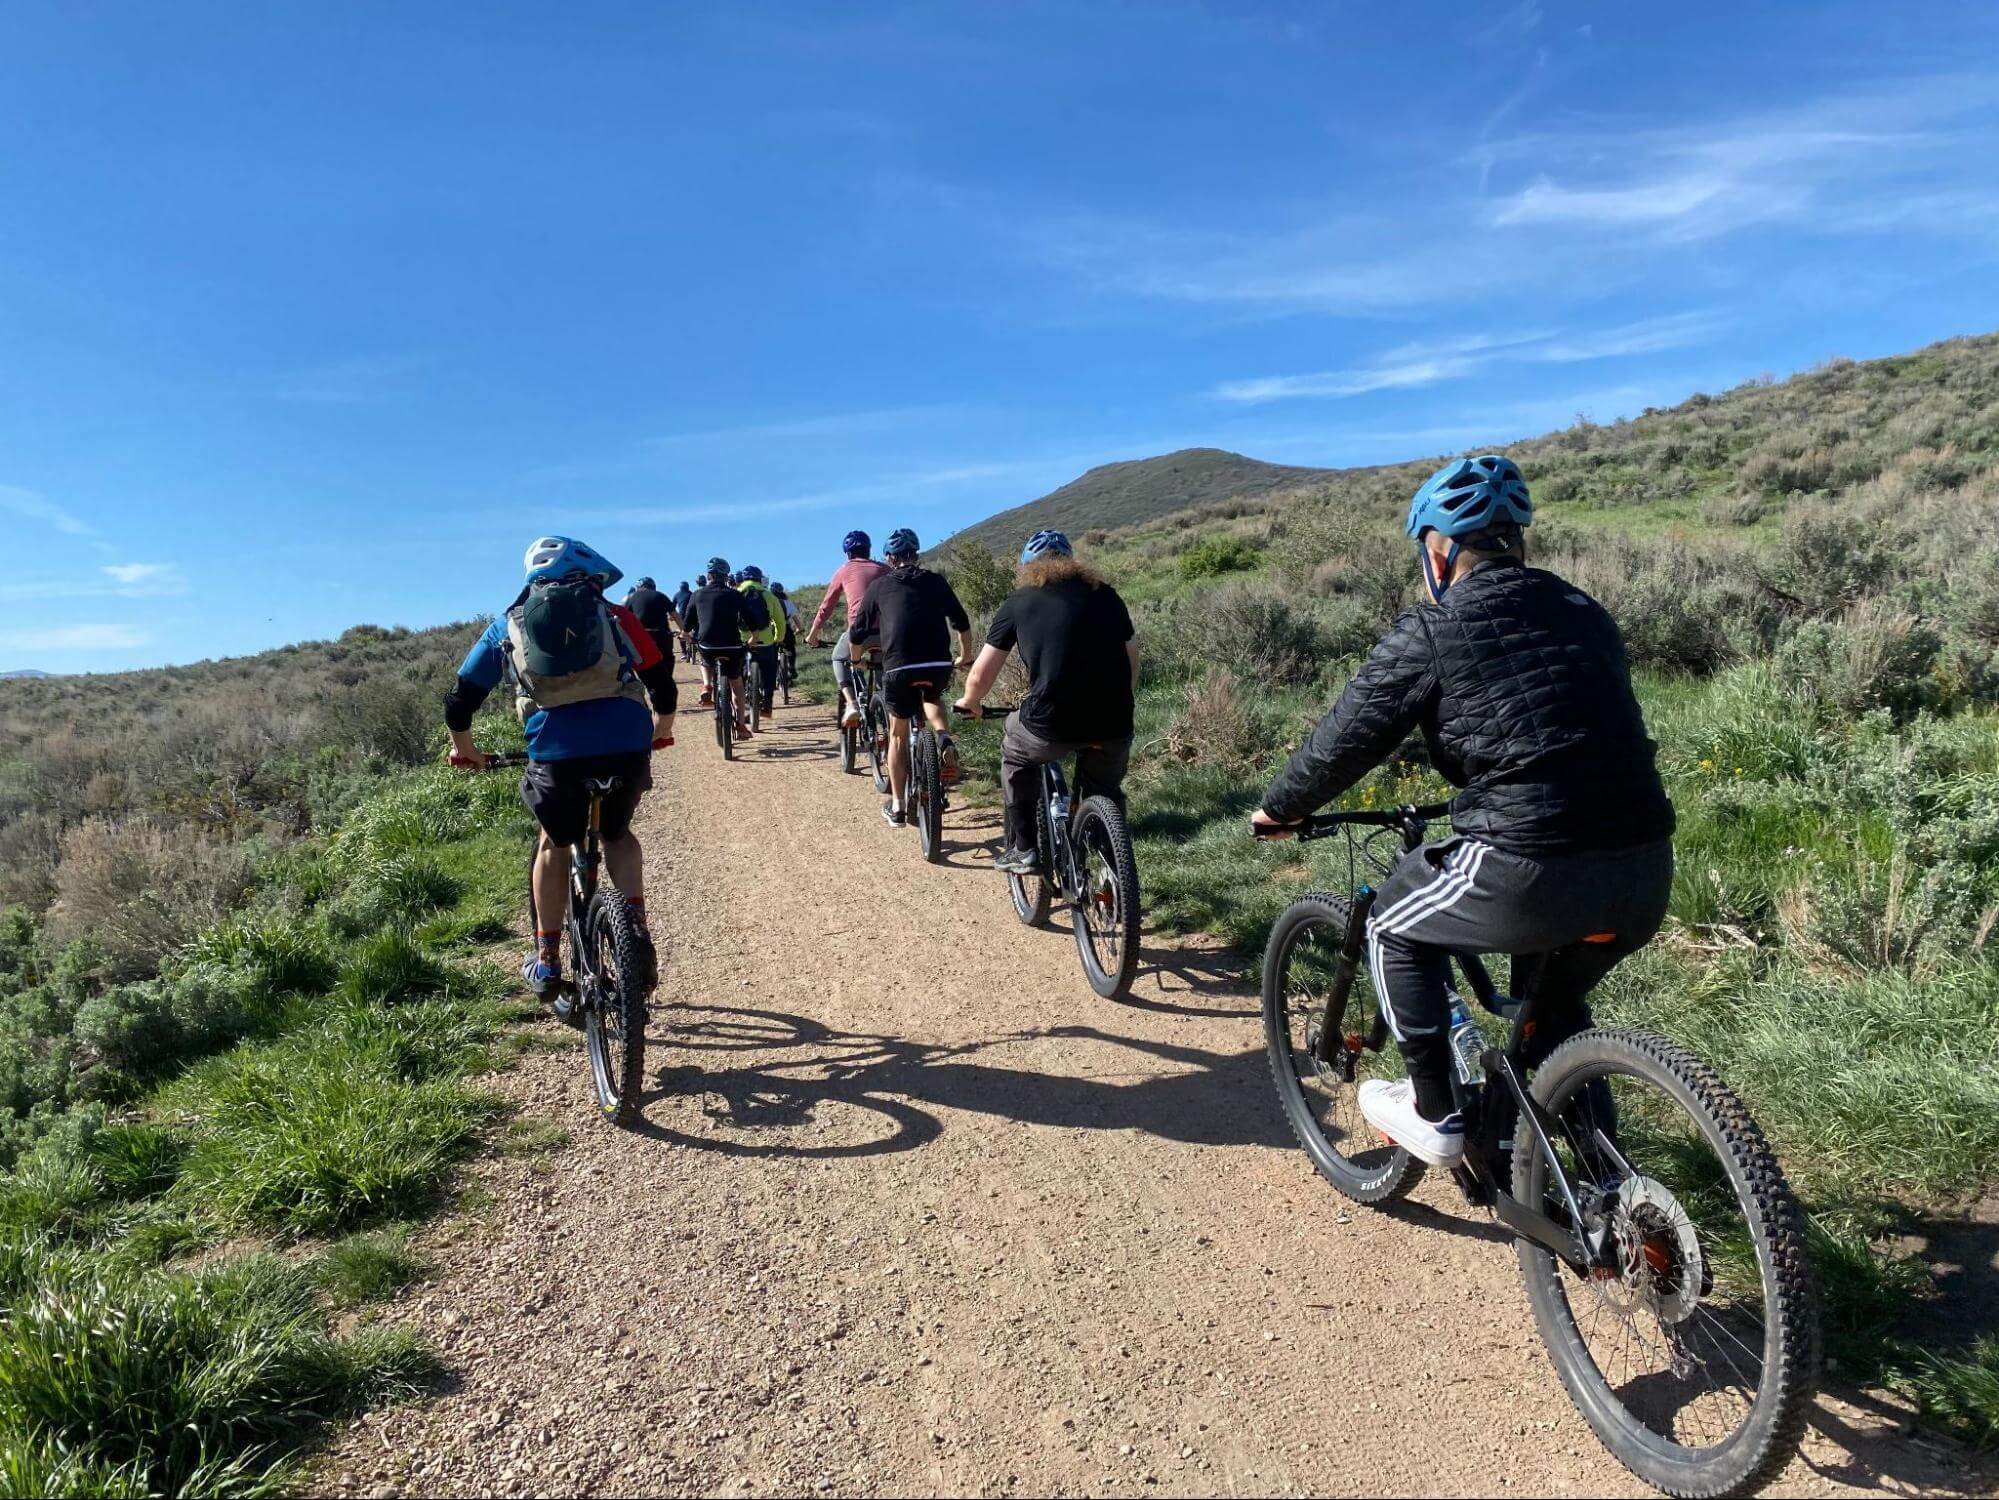 Mountain biking during our last team retreat in Utah